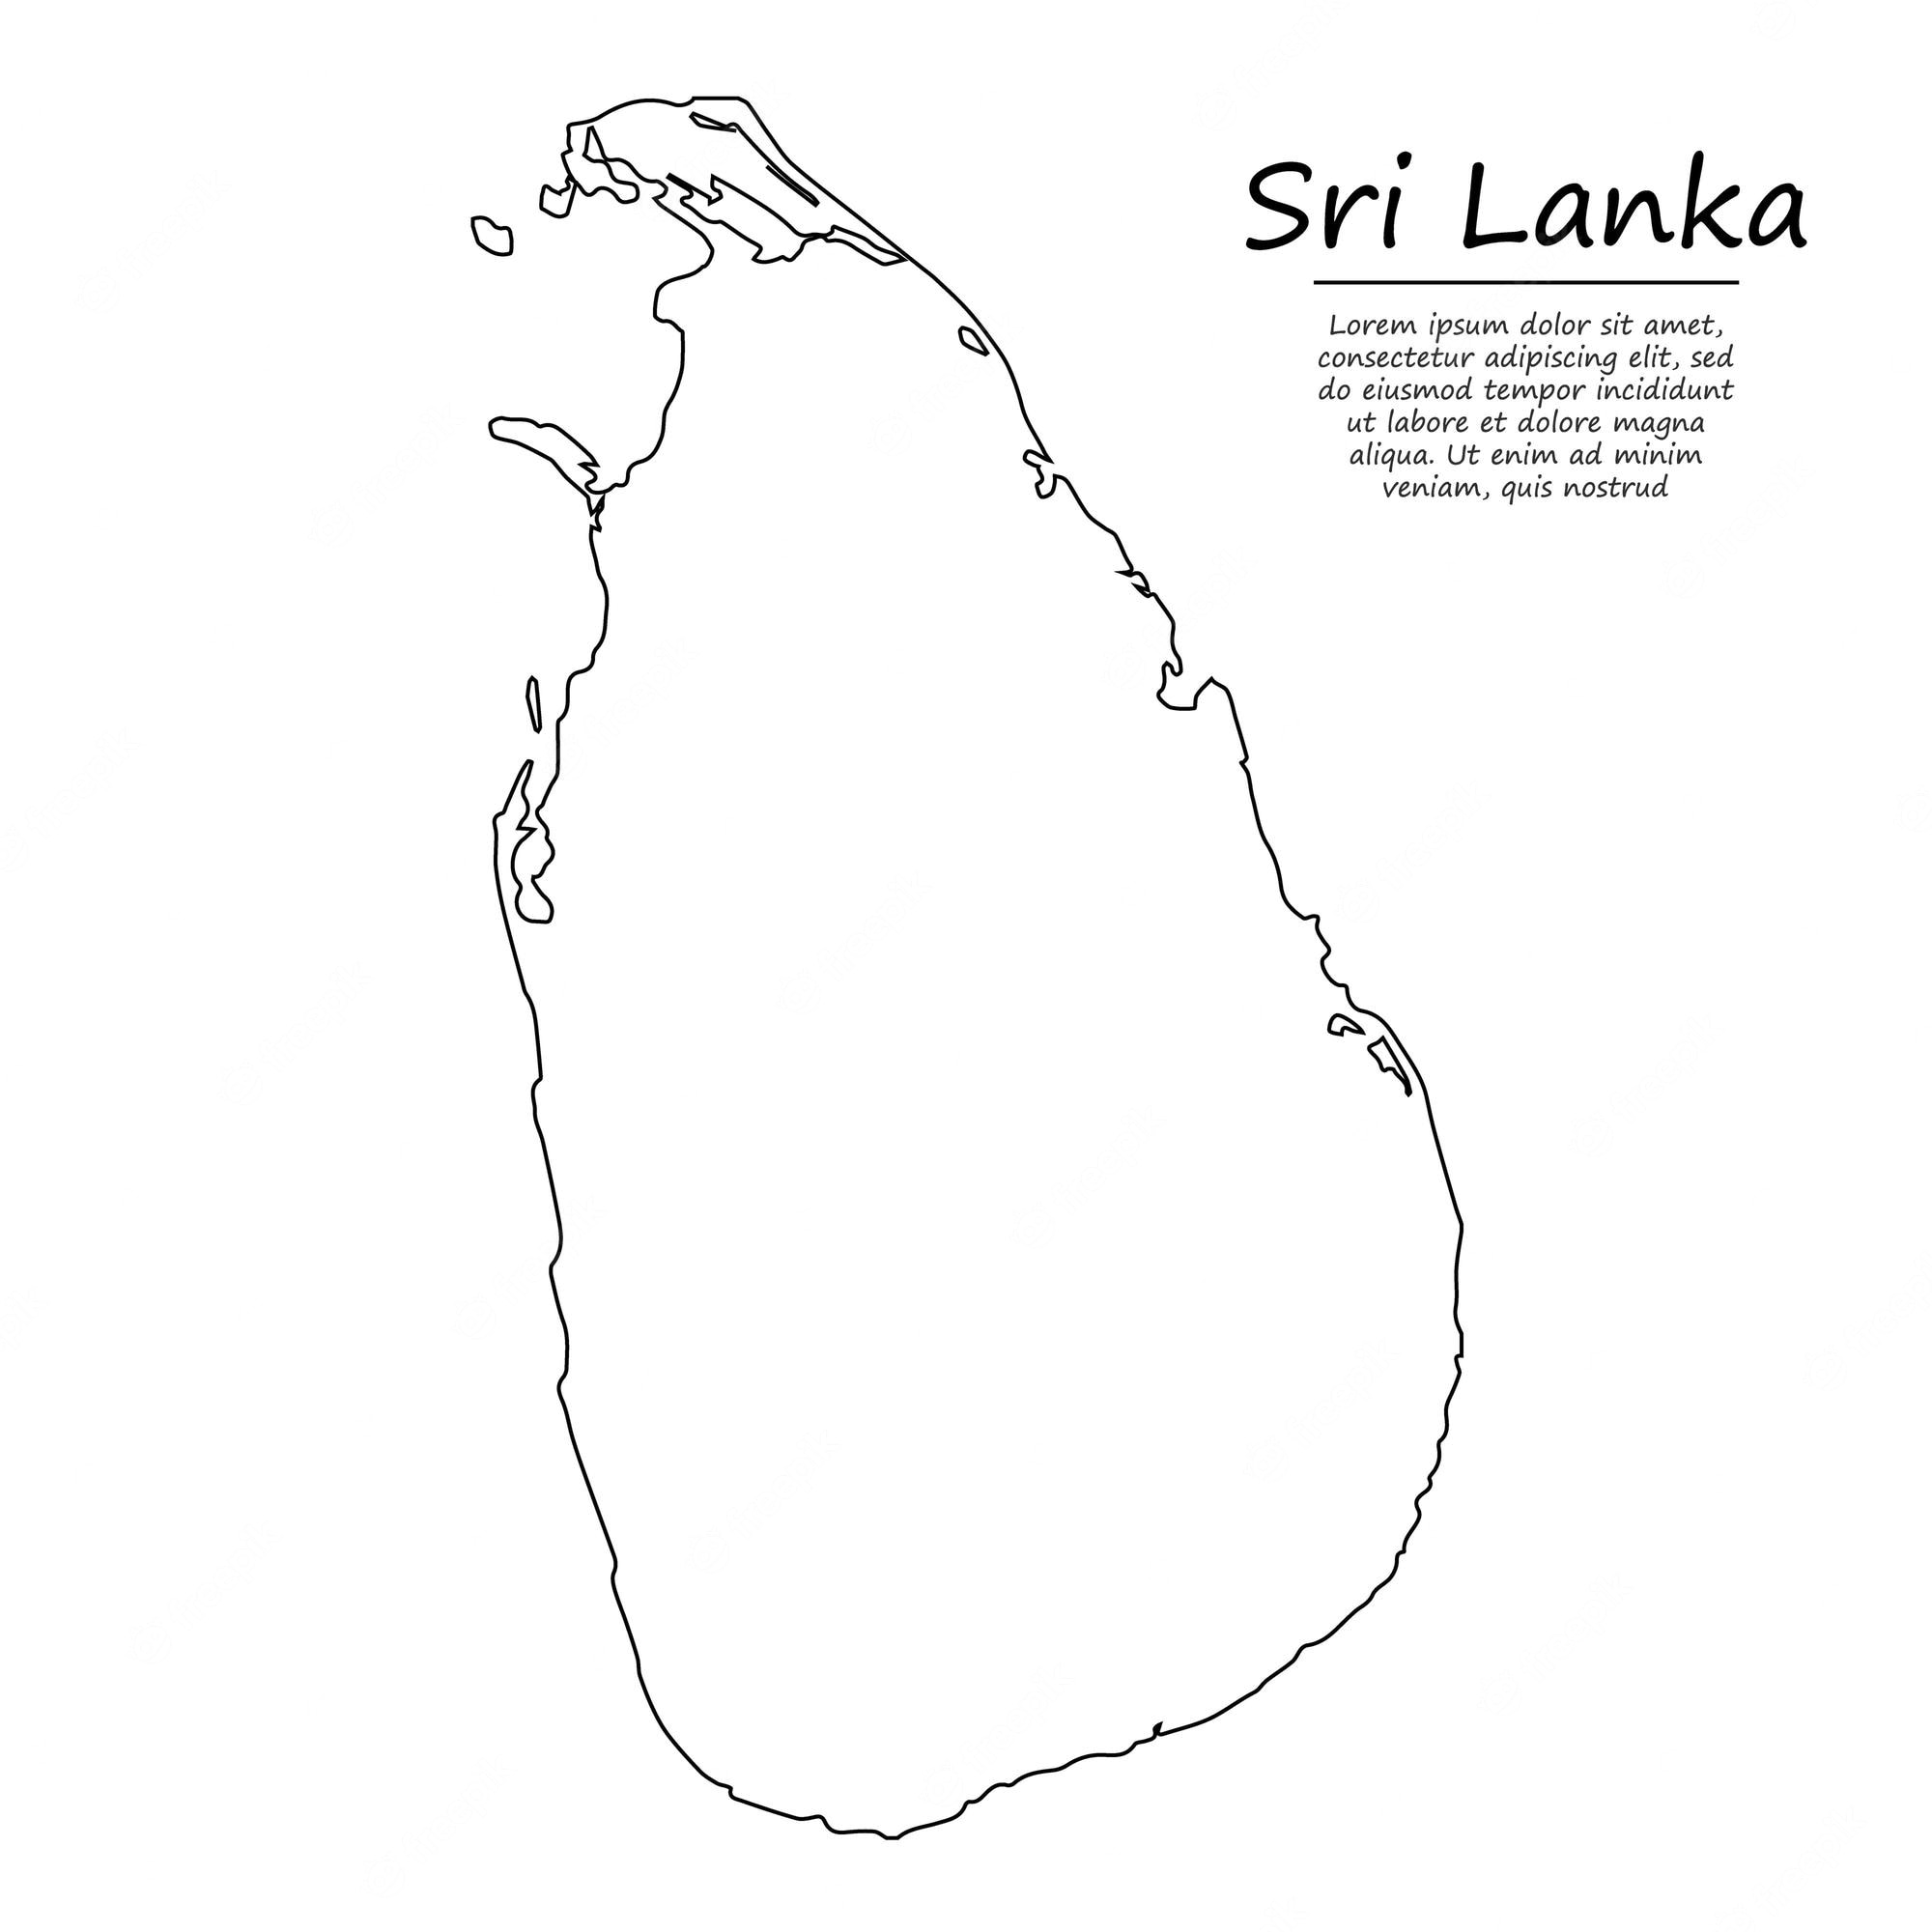 Sri Lanka Map Image. Free Vectors, & PSD